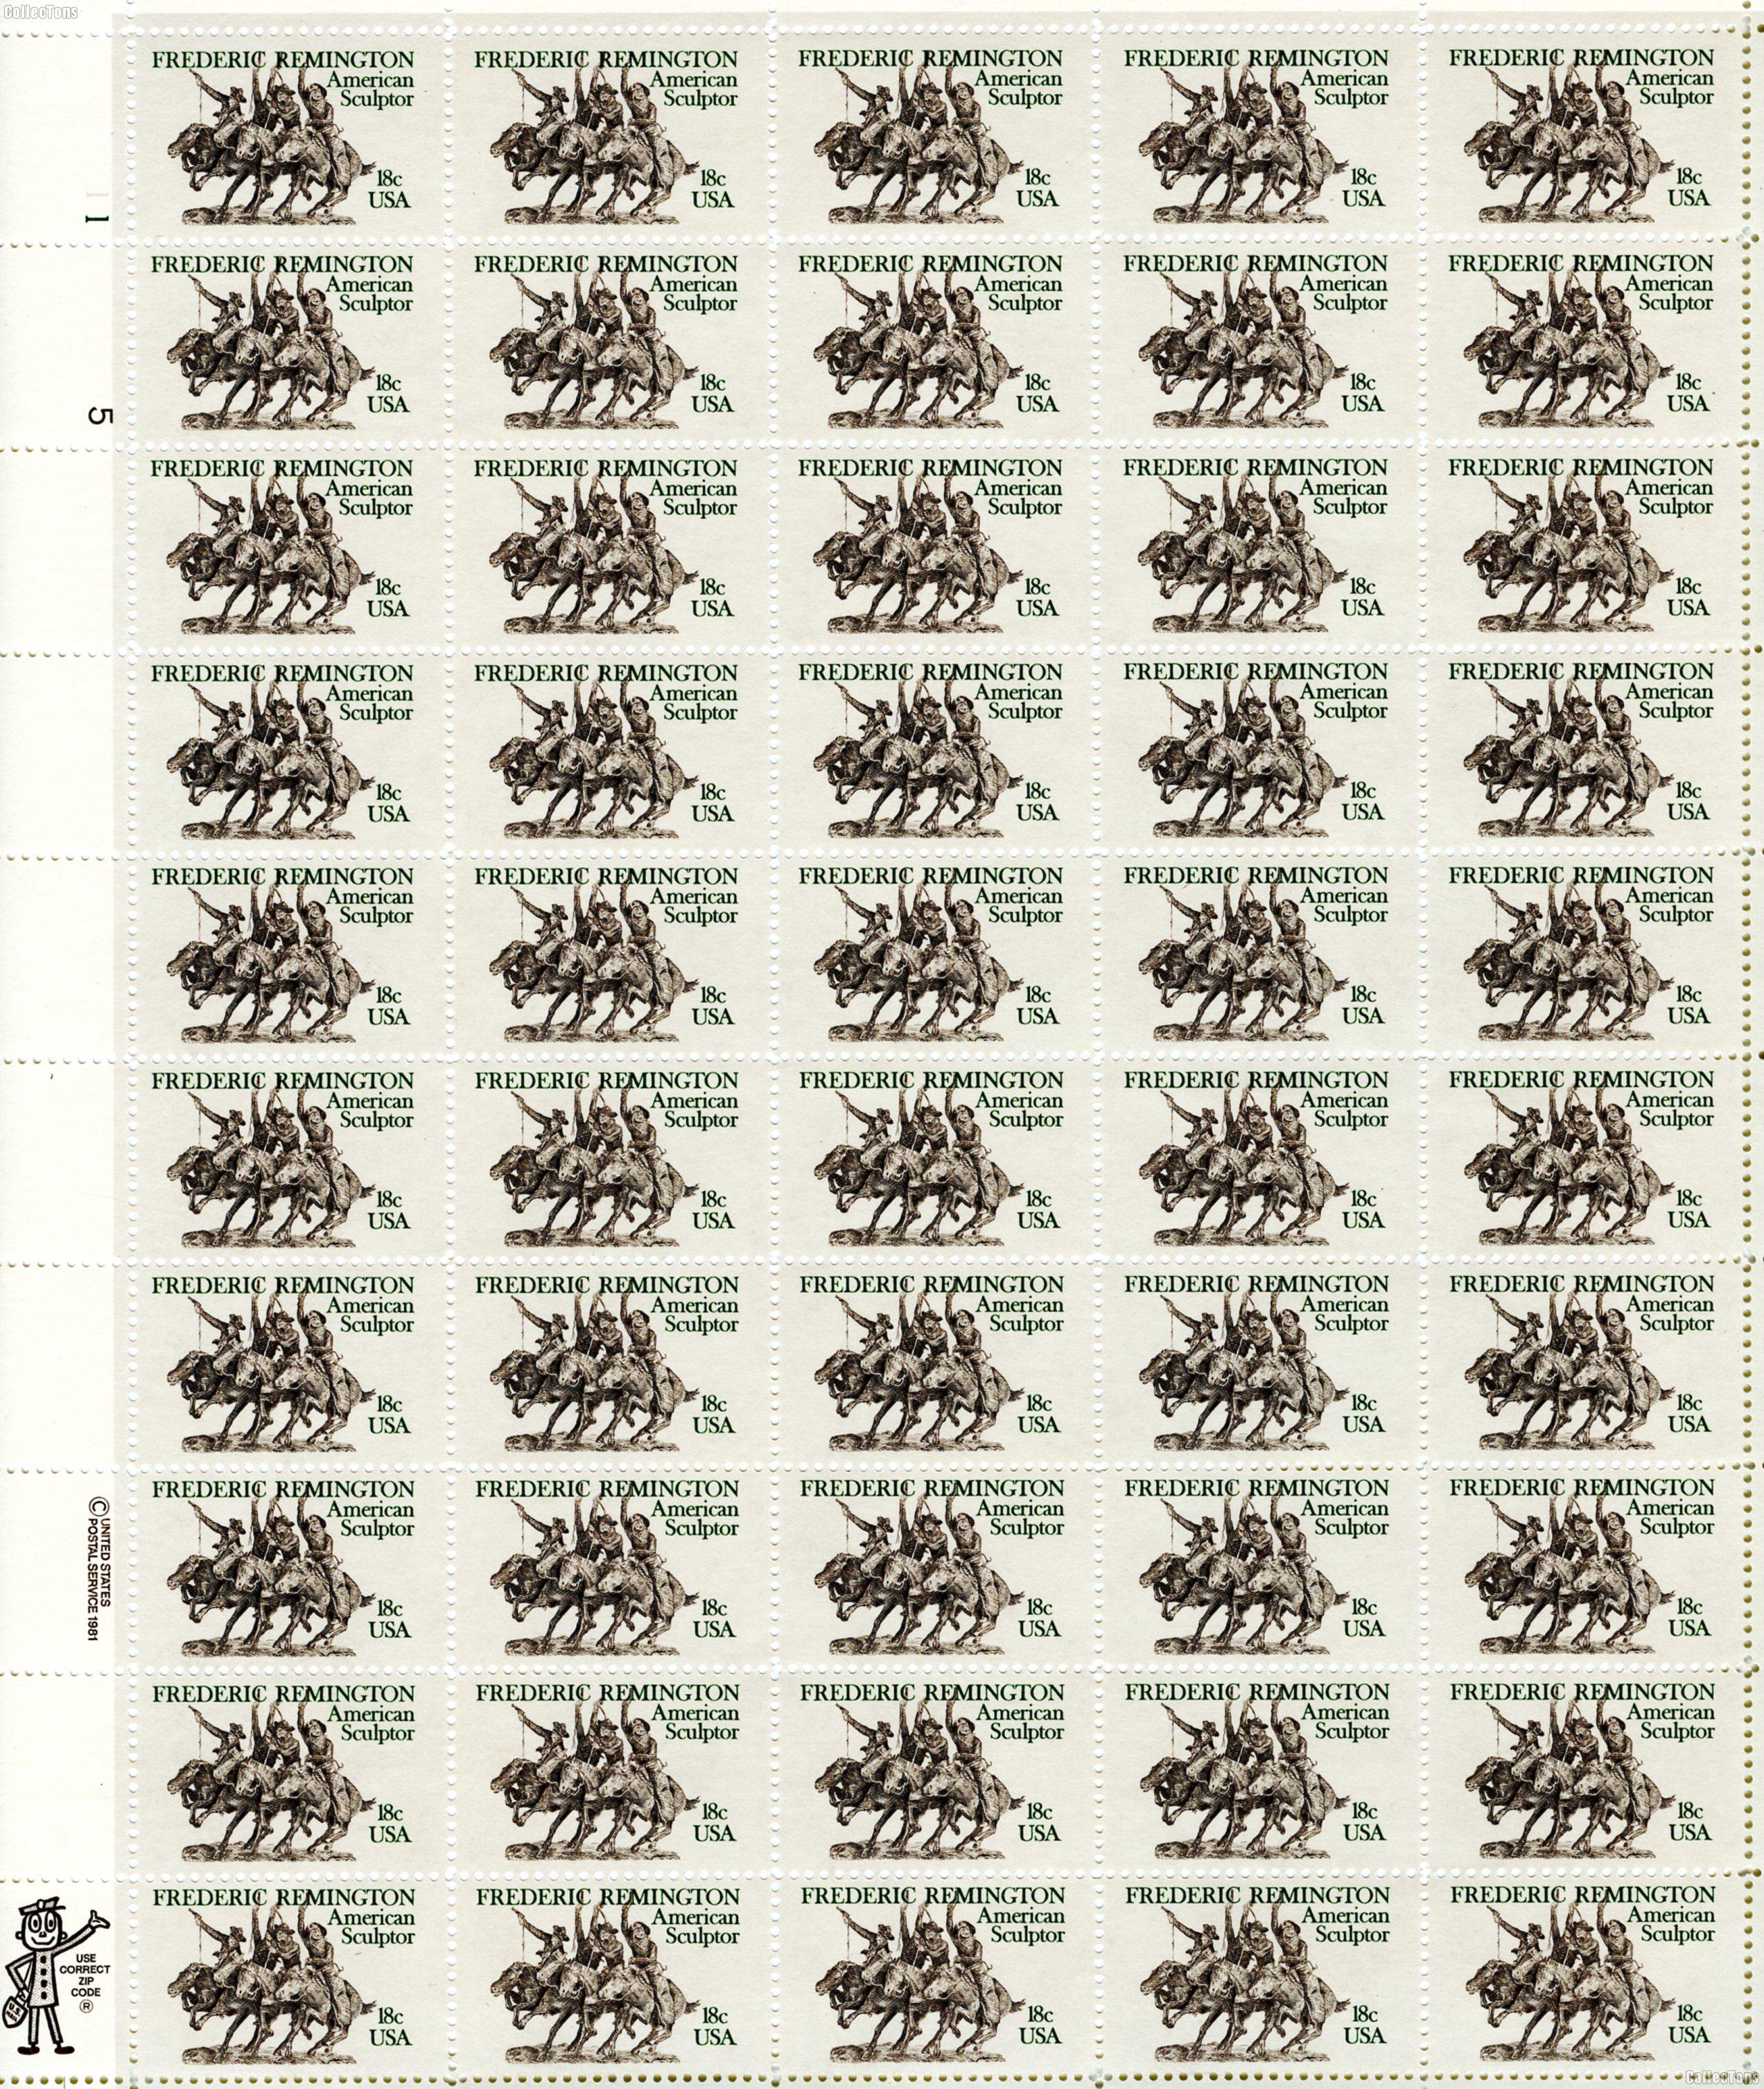 1981 Frederic Remington 18 Cent US Postage Stamp MNH Sheet of 50 Scott #1934